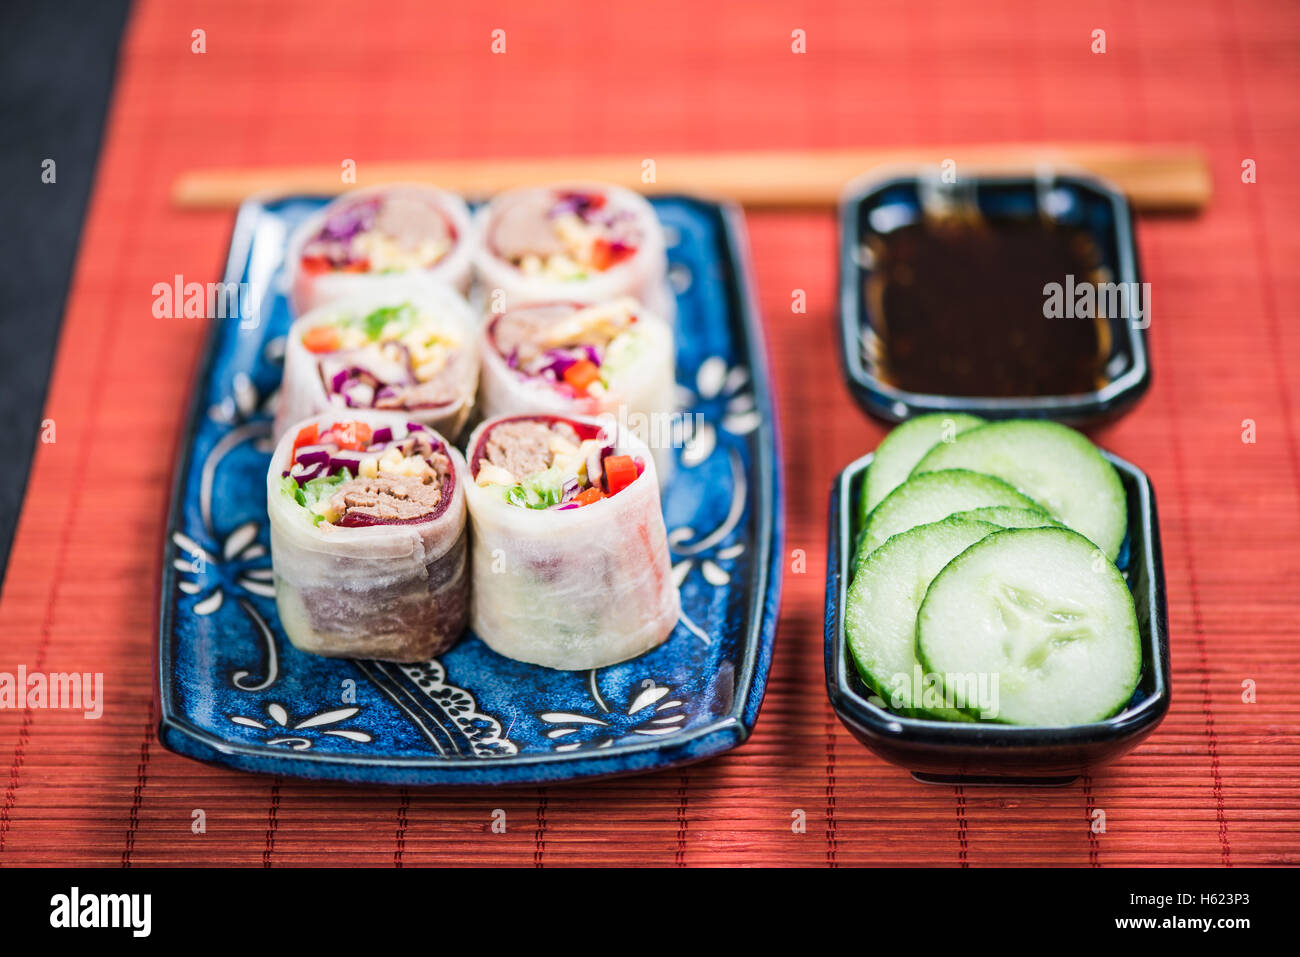 Sushi and teriyaki beef bites, japanese or asian food Stock Photo